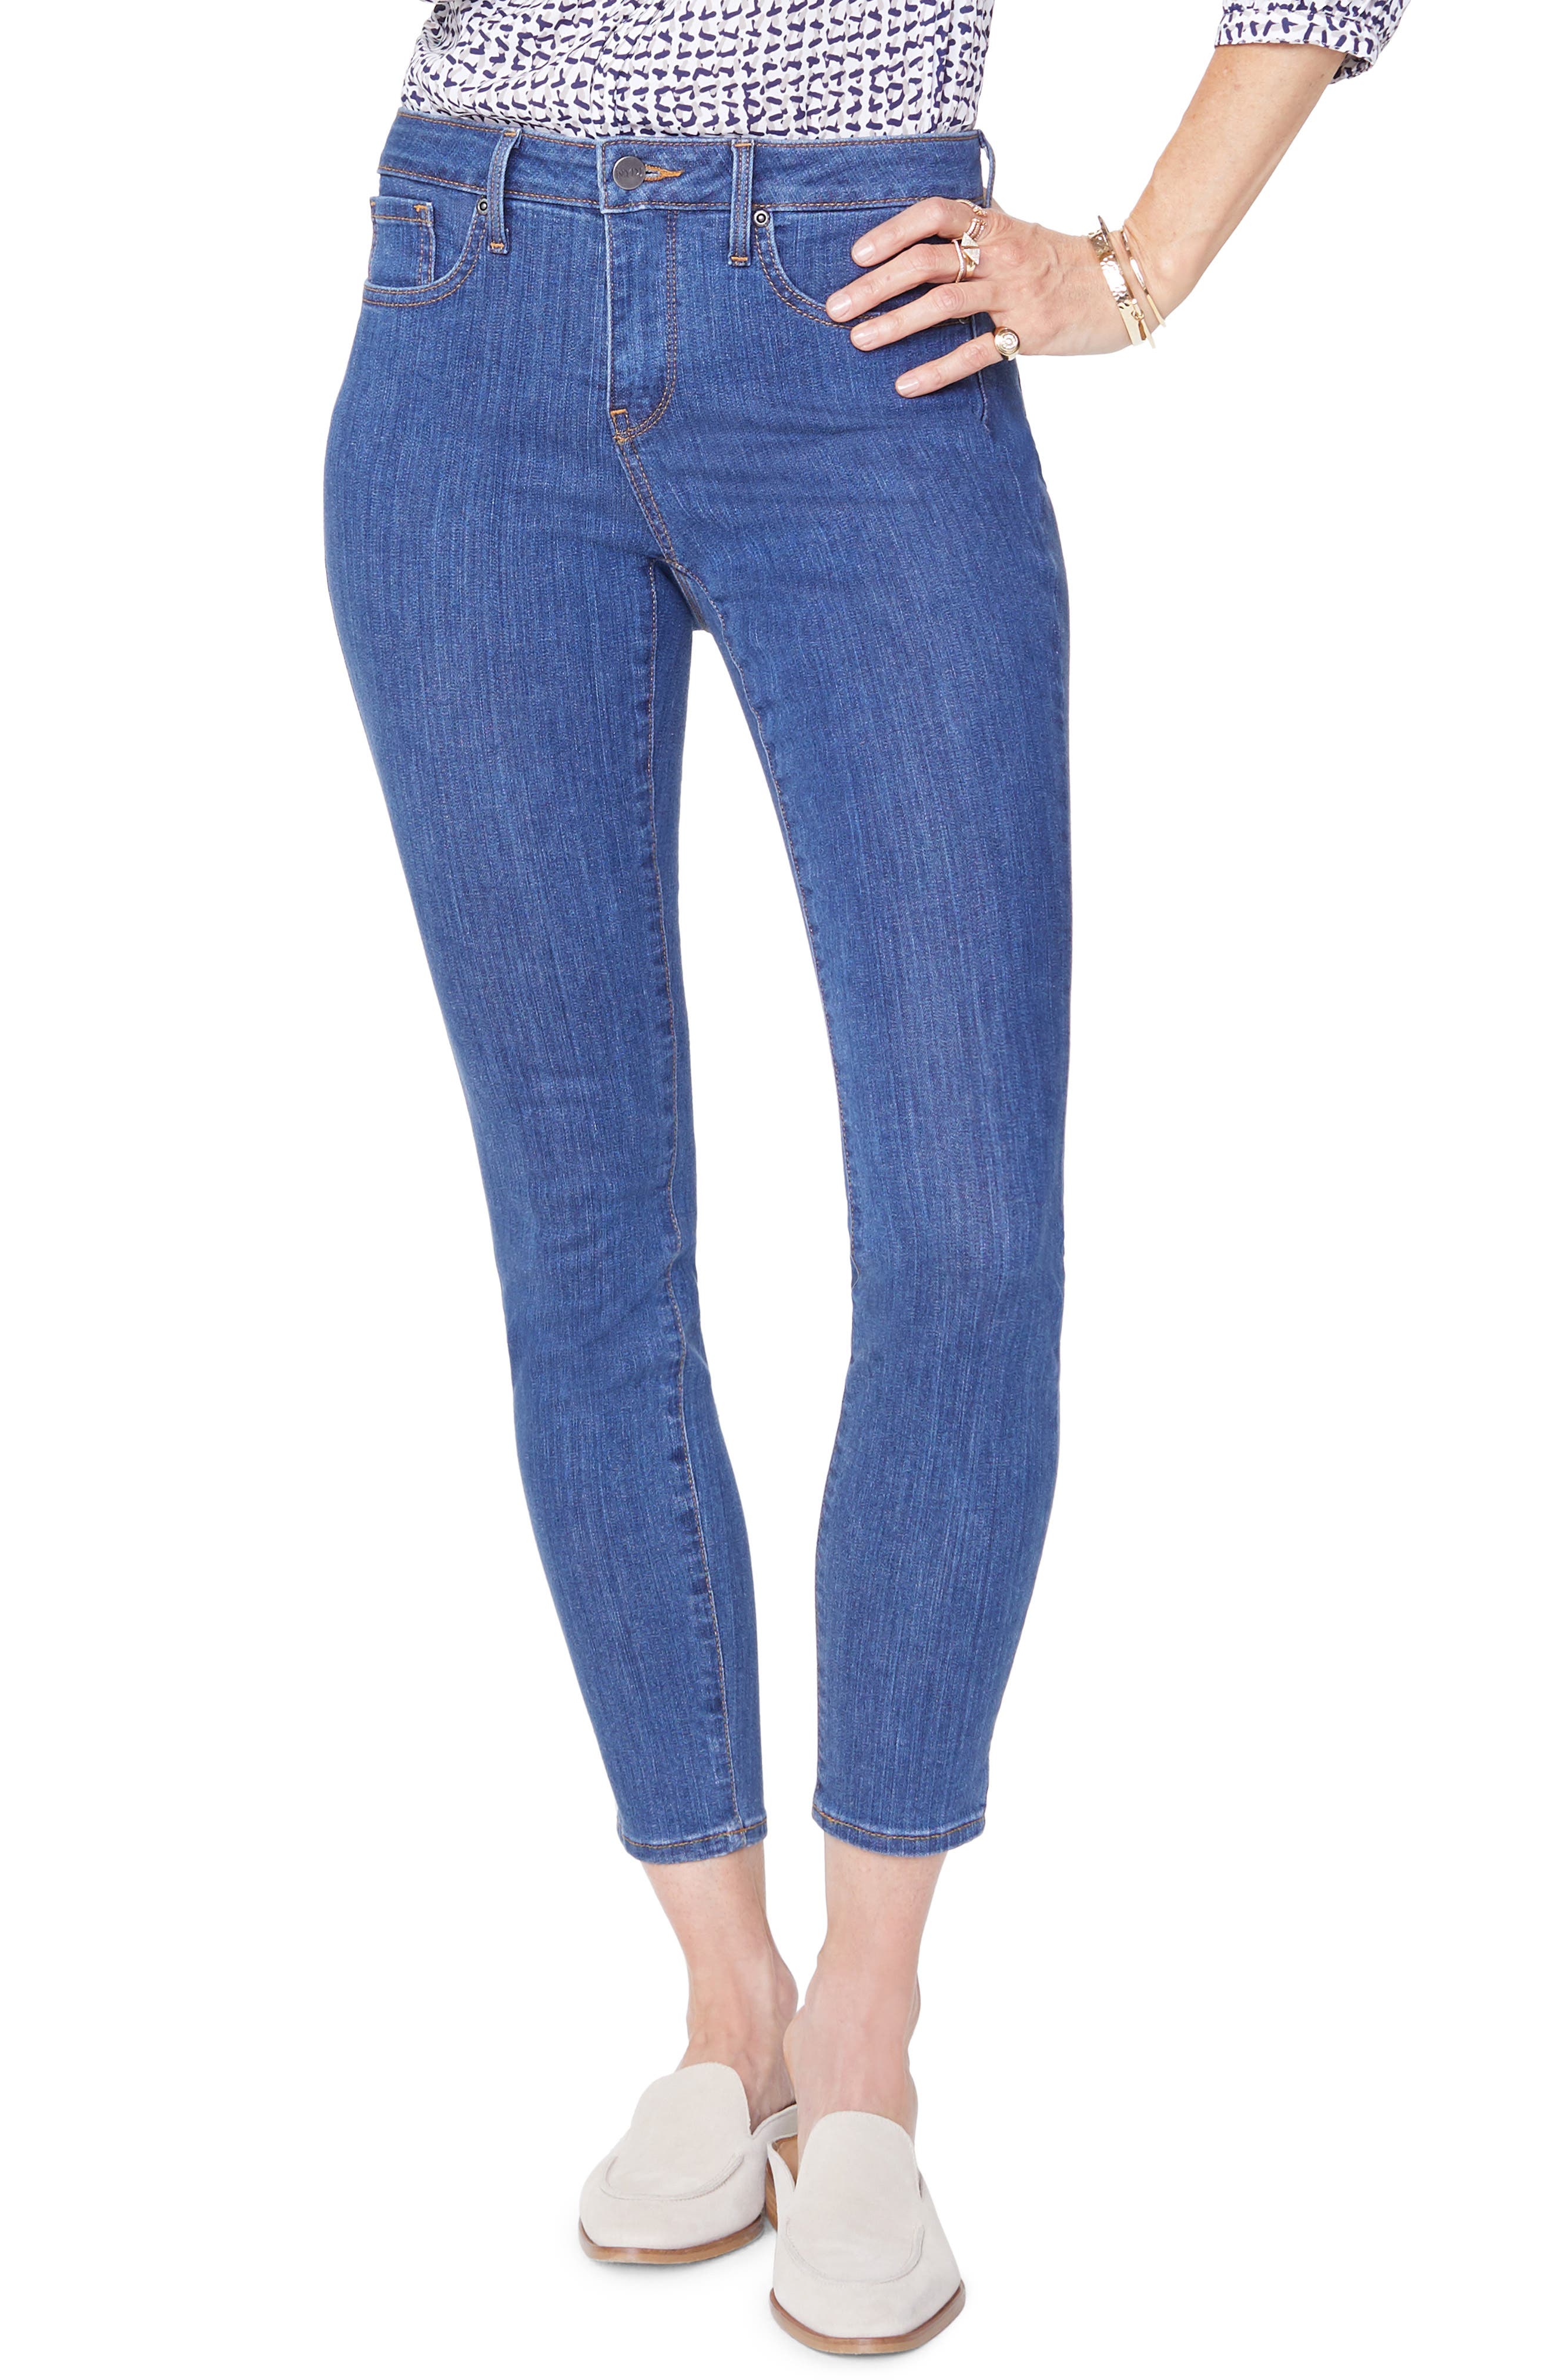 size 00 skinny jeans